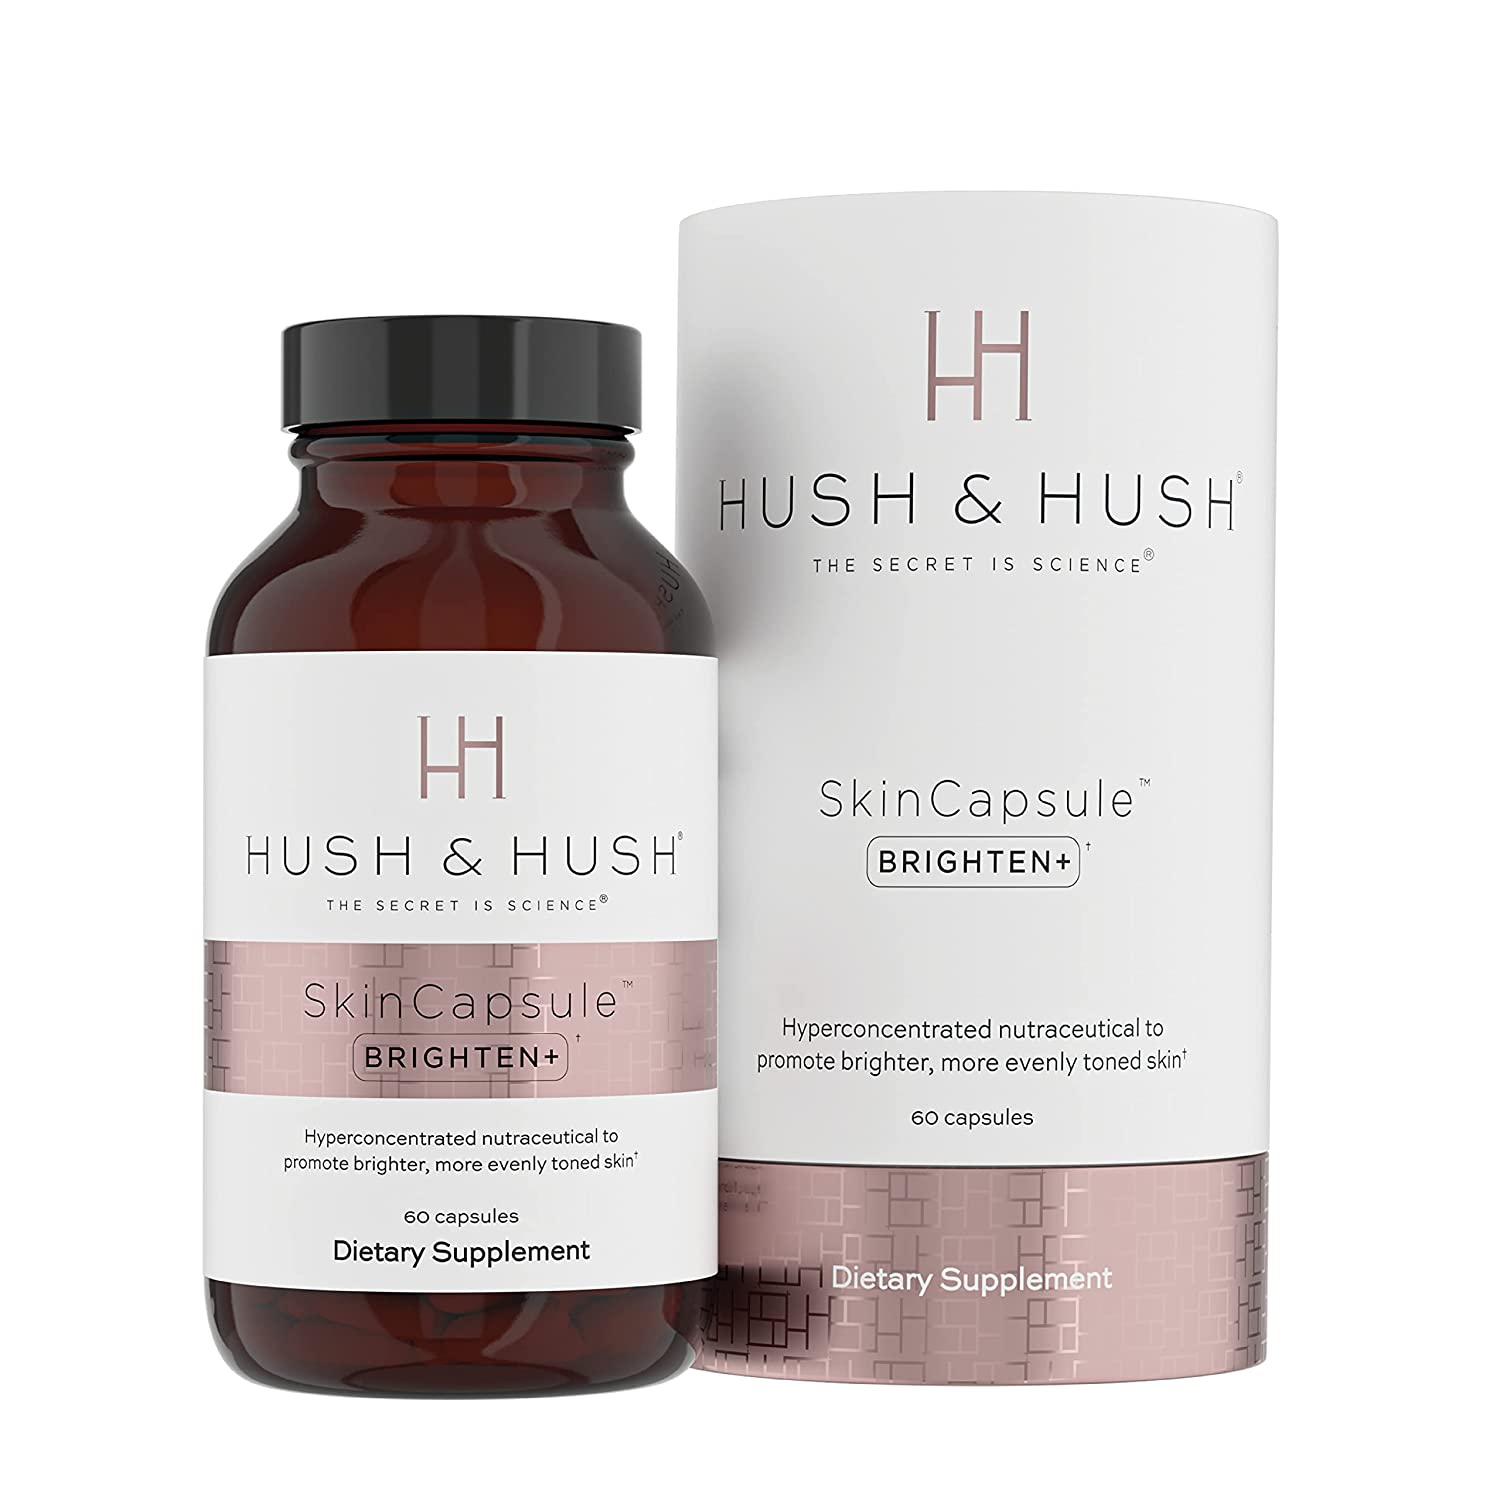 Hush & Hush SkinCapsule Brighten+